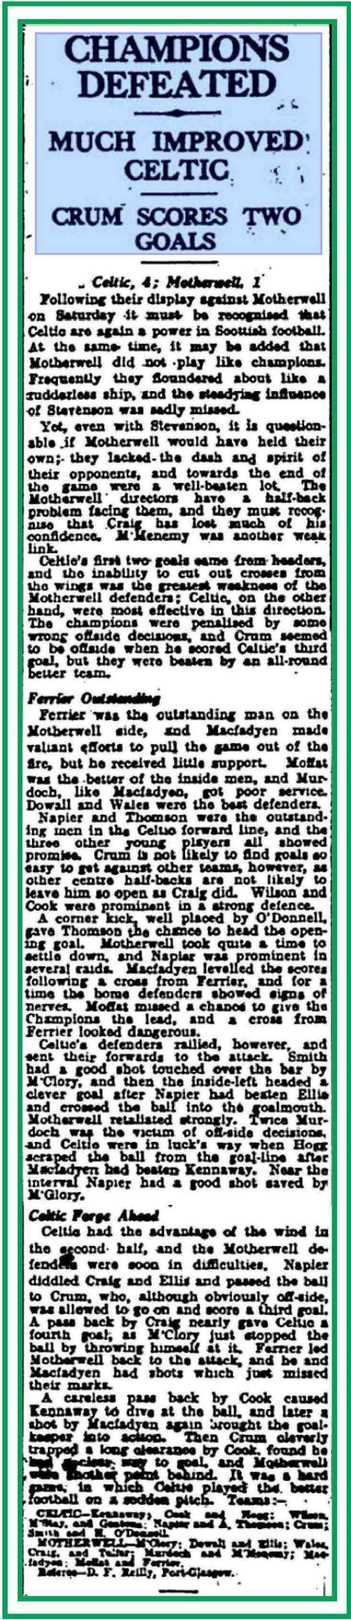 Newspaper Match Report versus Celtic